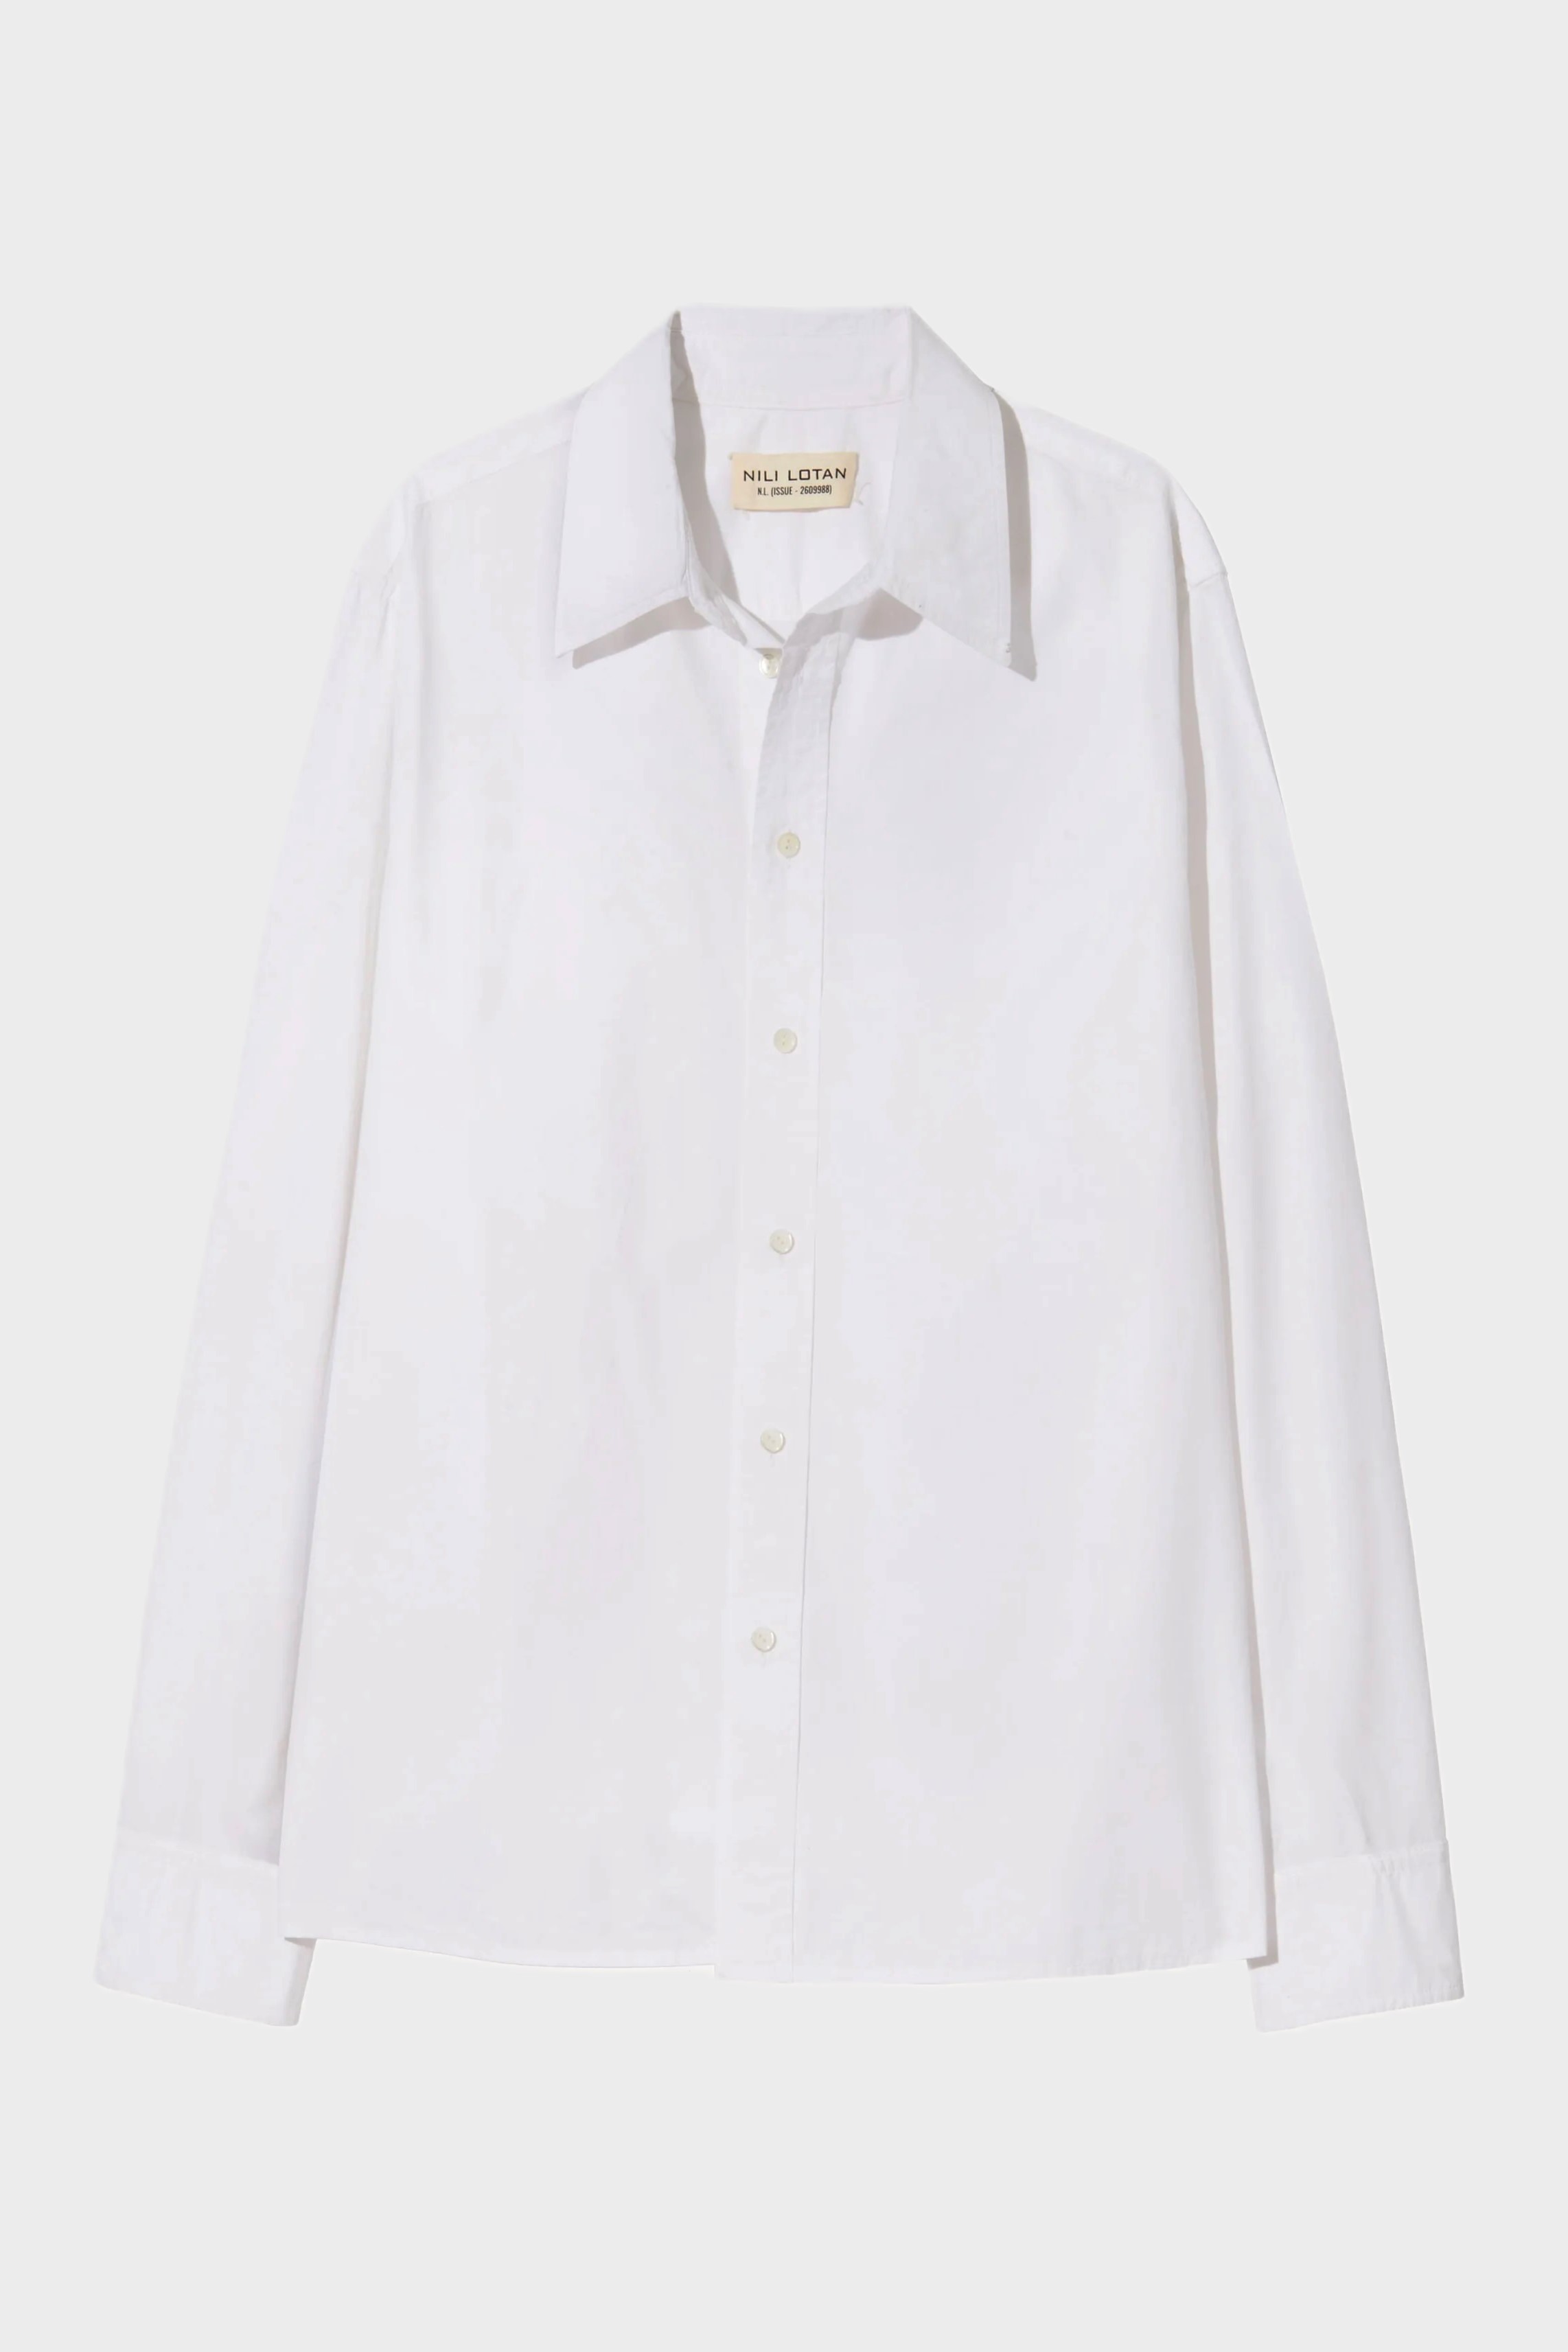 NILI LOTAN Raphael Classic Shirt in White